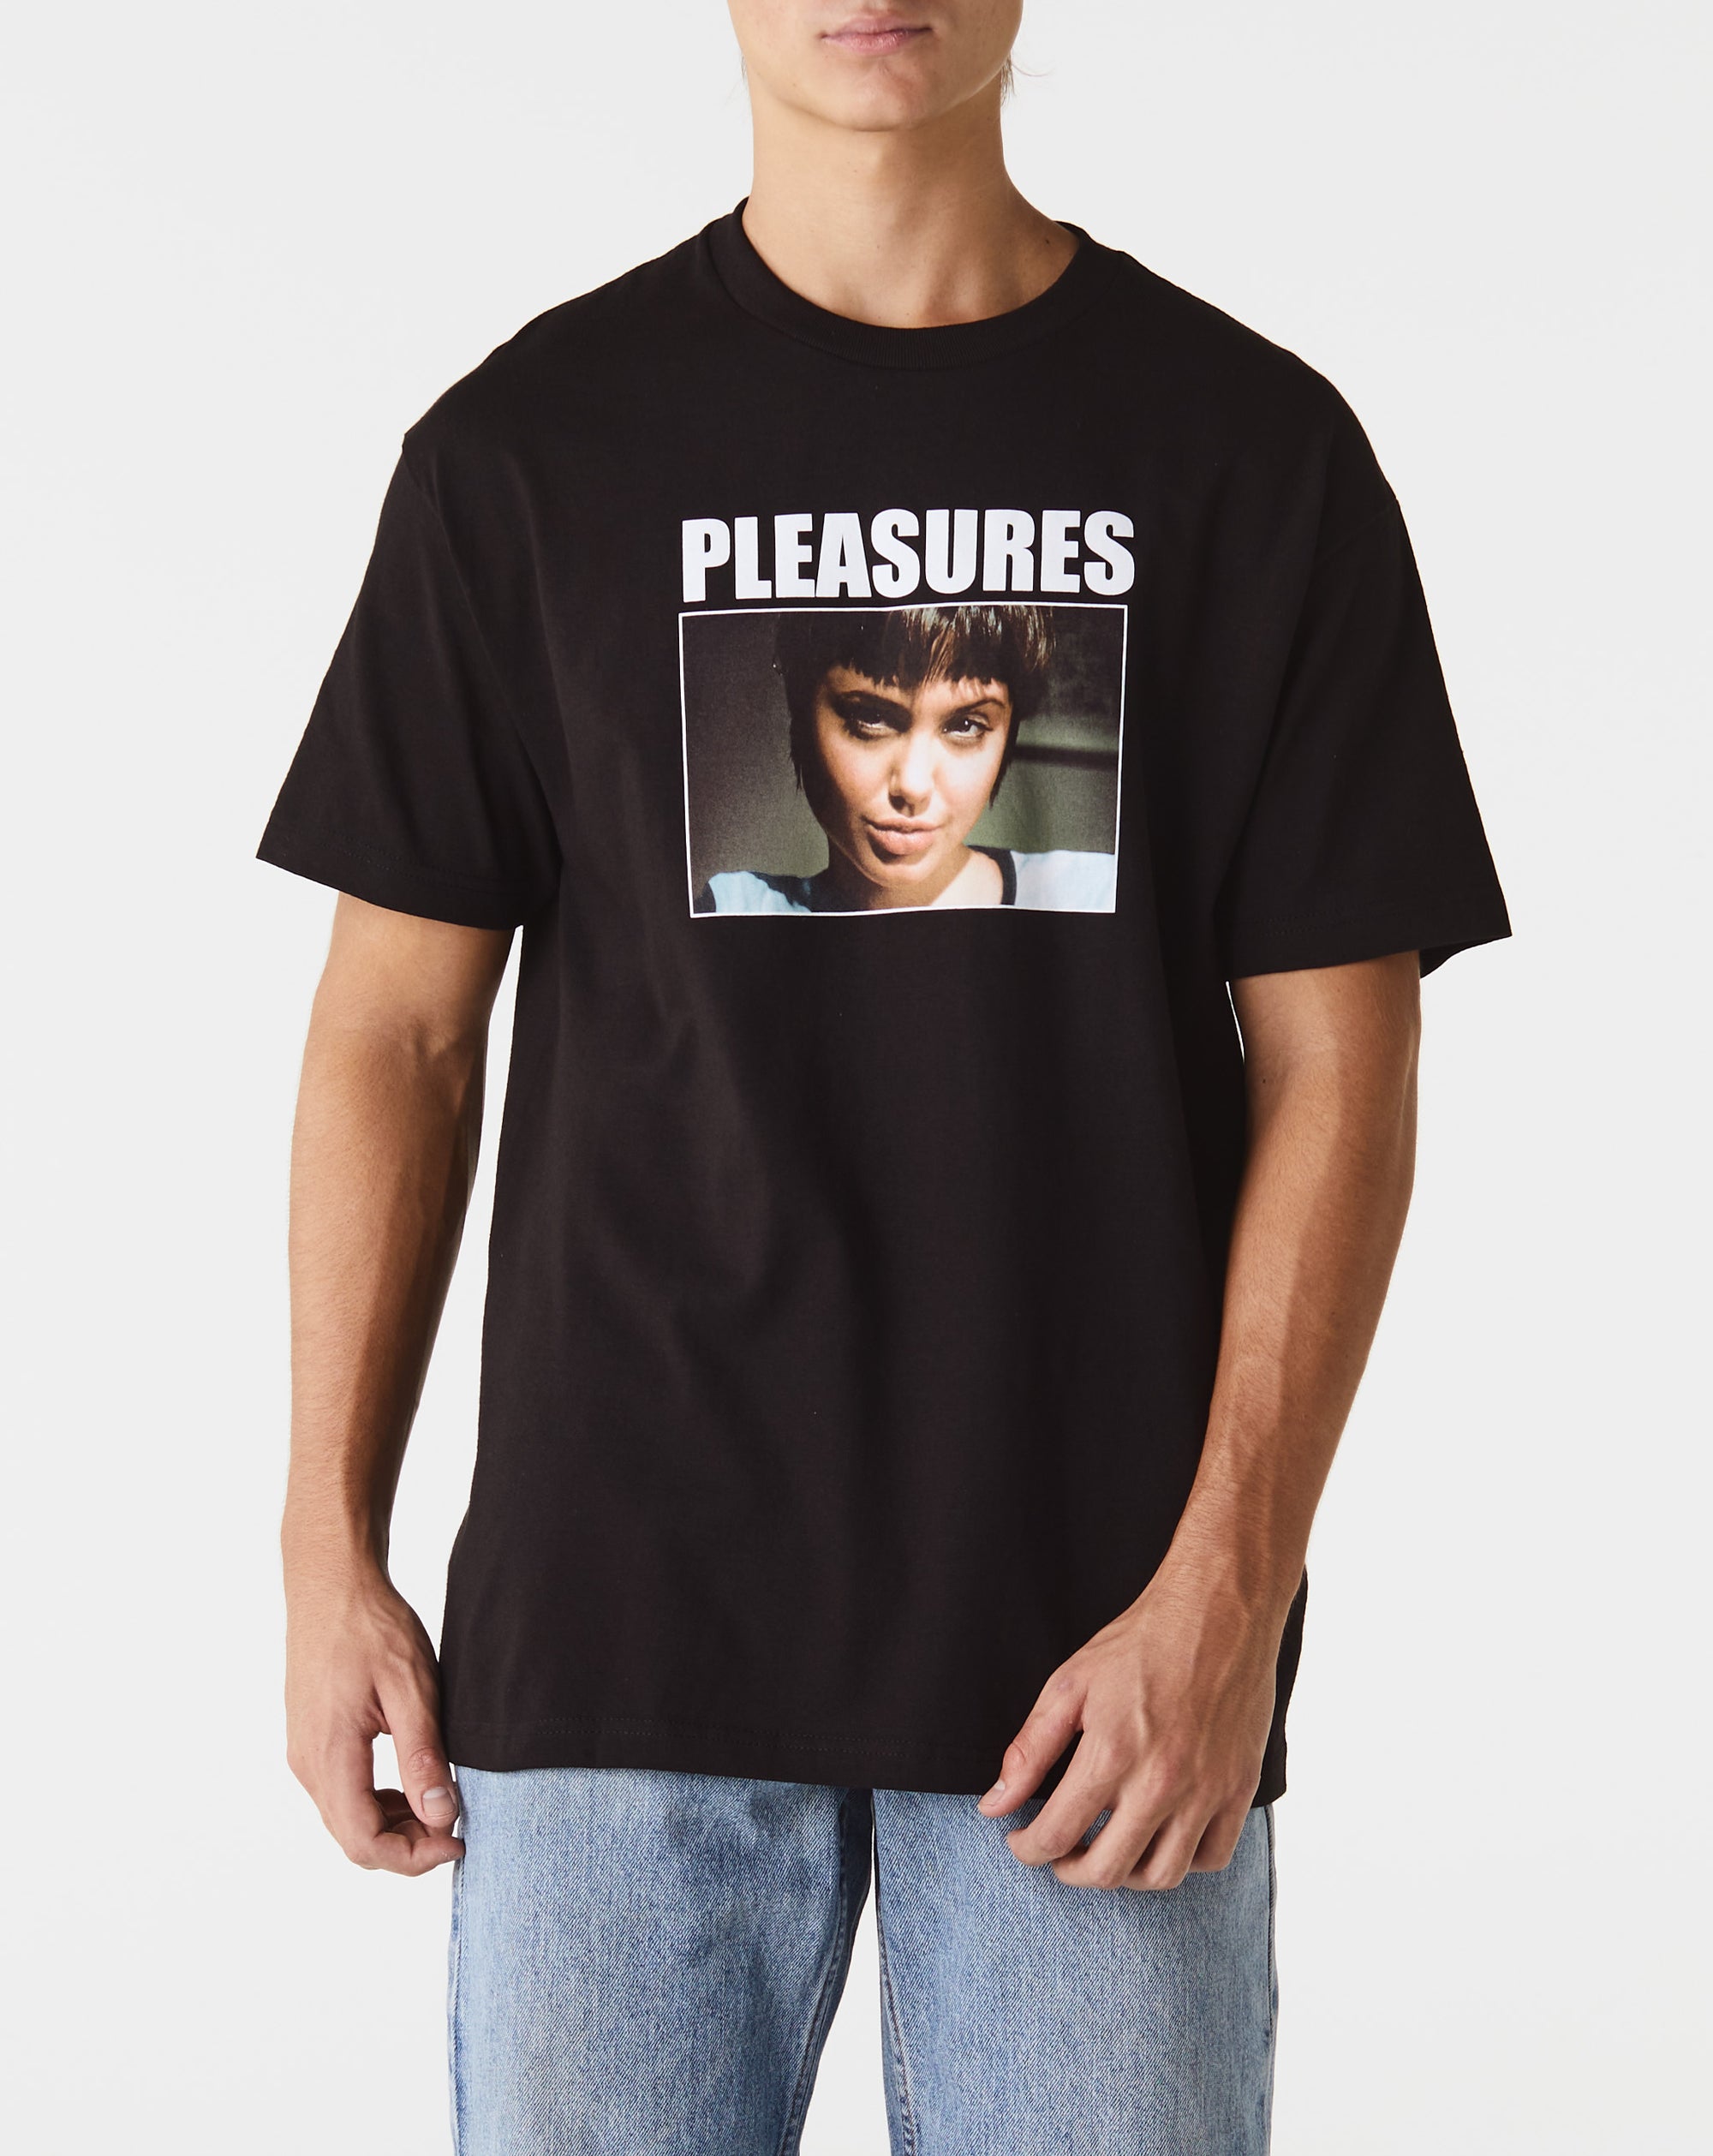 Pleasures Kate T-Shirt - Rule of Next Apparel